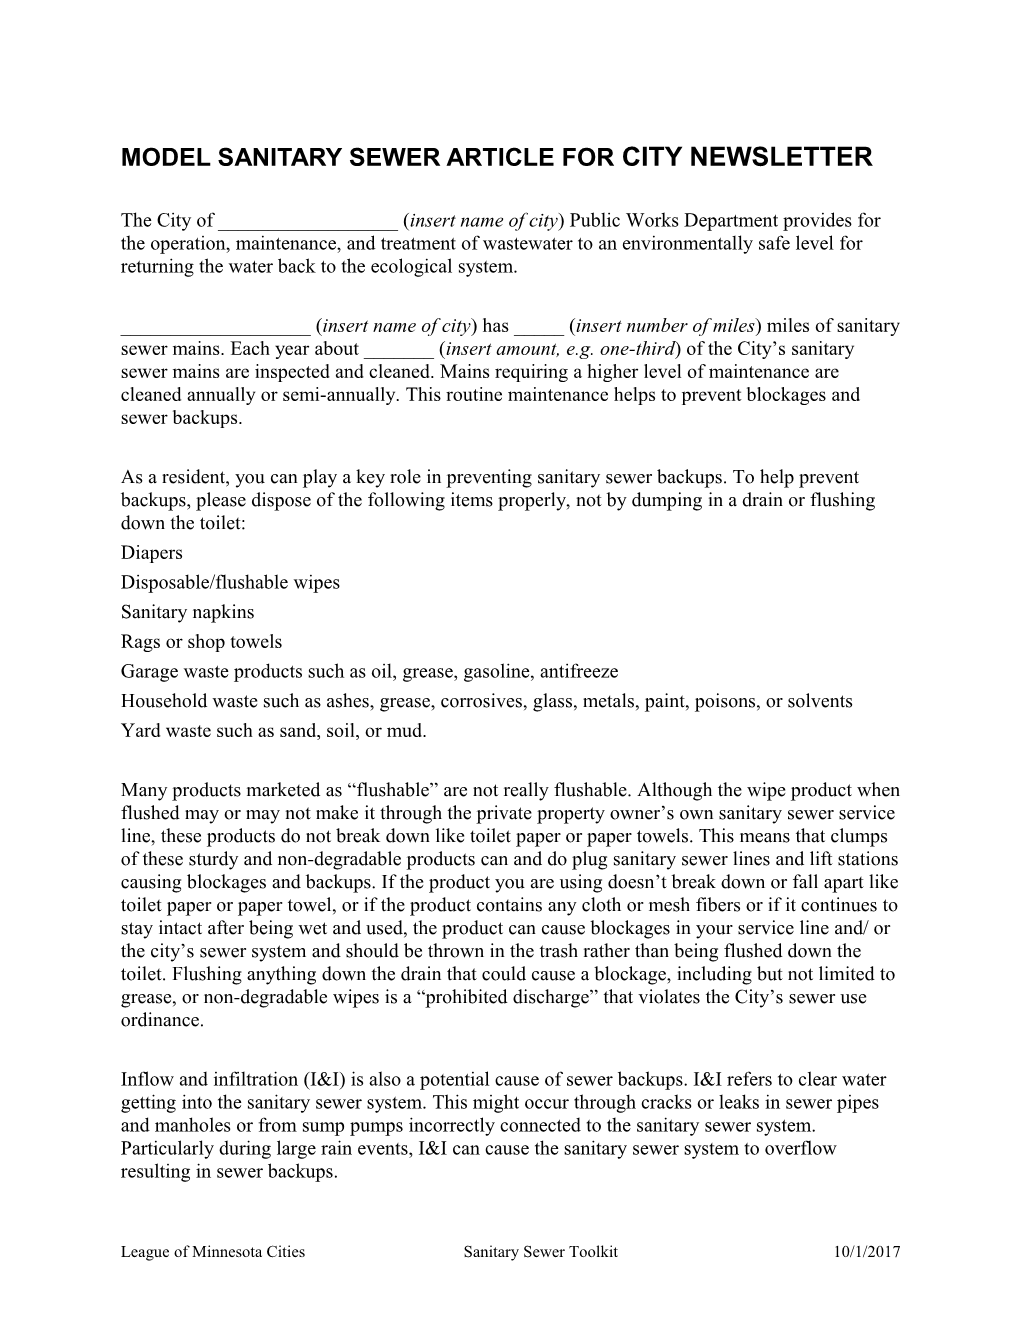 Model Sanitary Sewer Article for City Newsletter